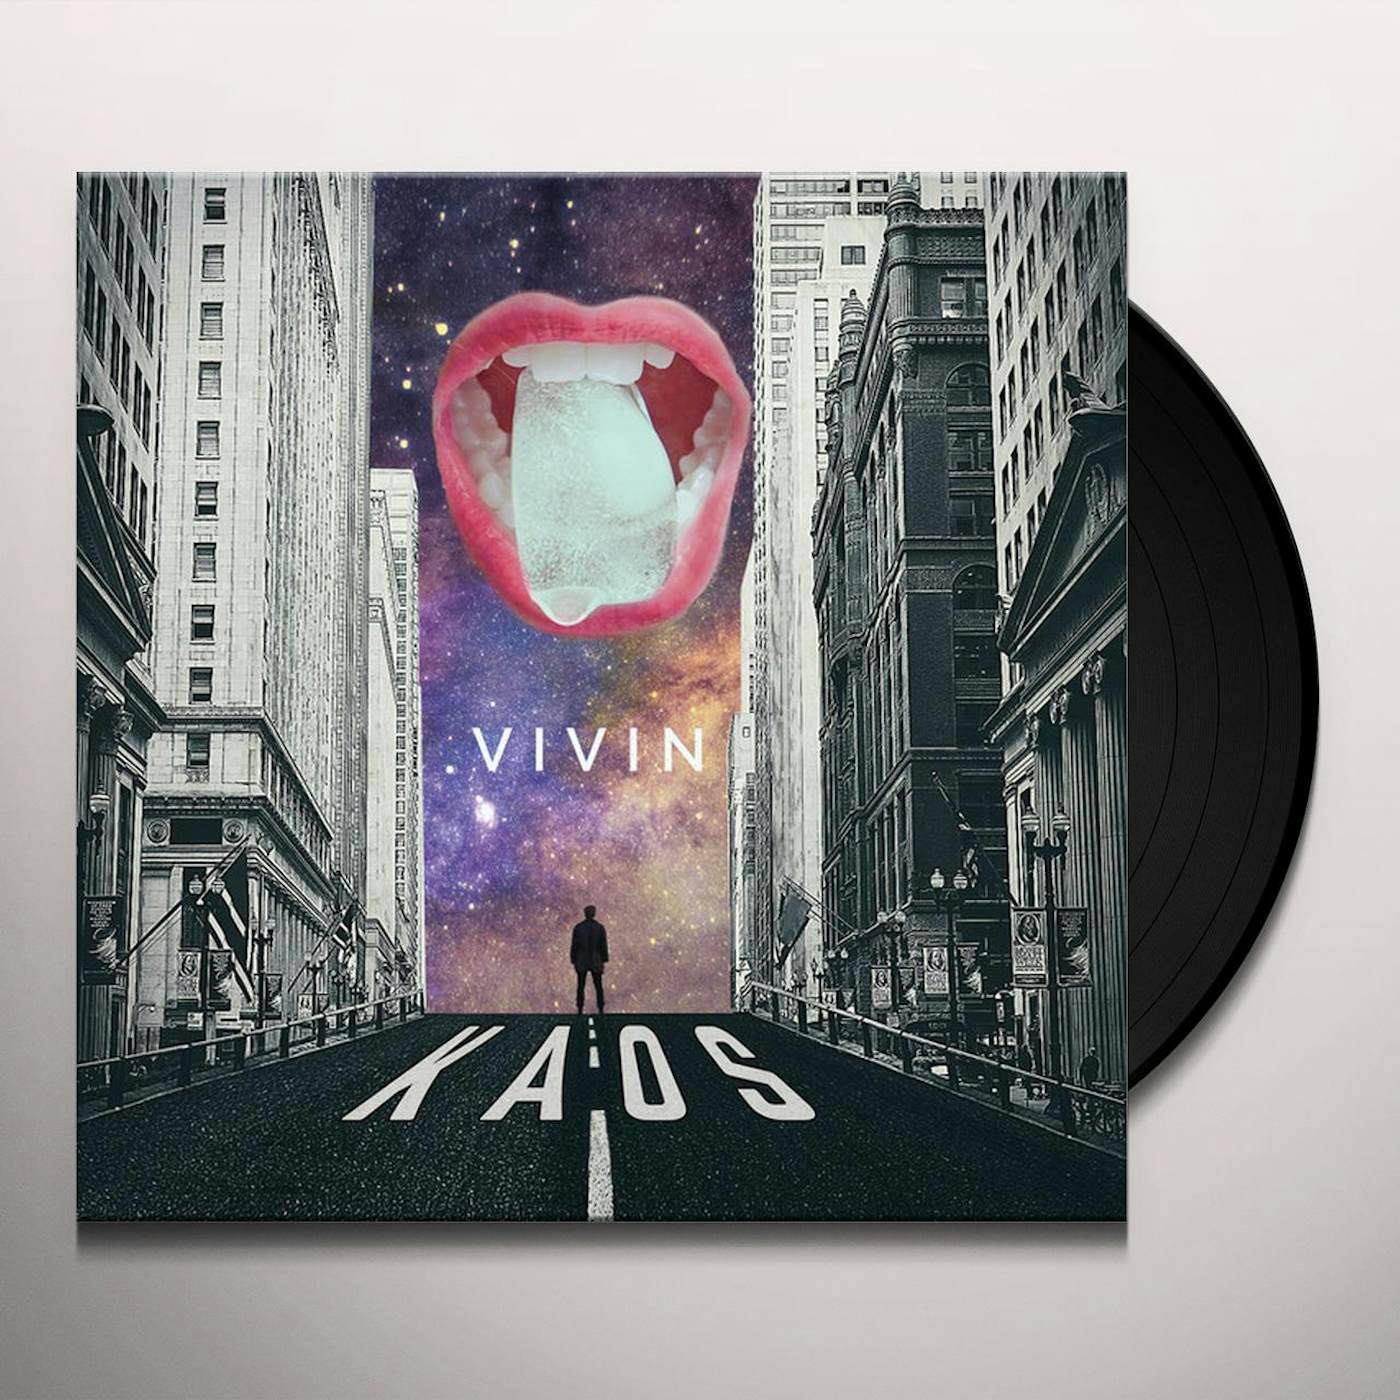 VIVIN KAOS Vinyl Record